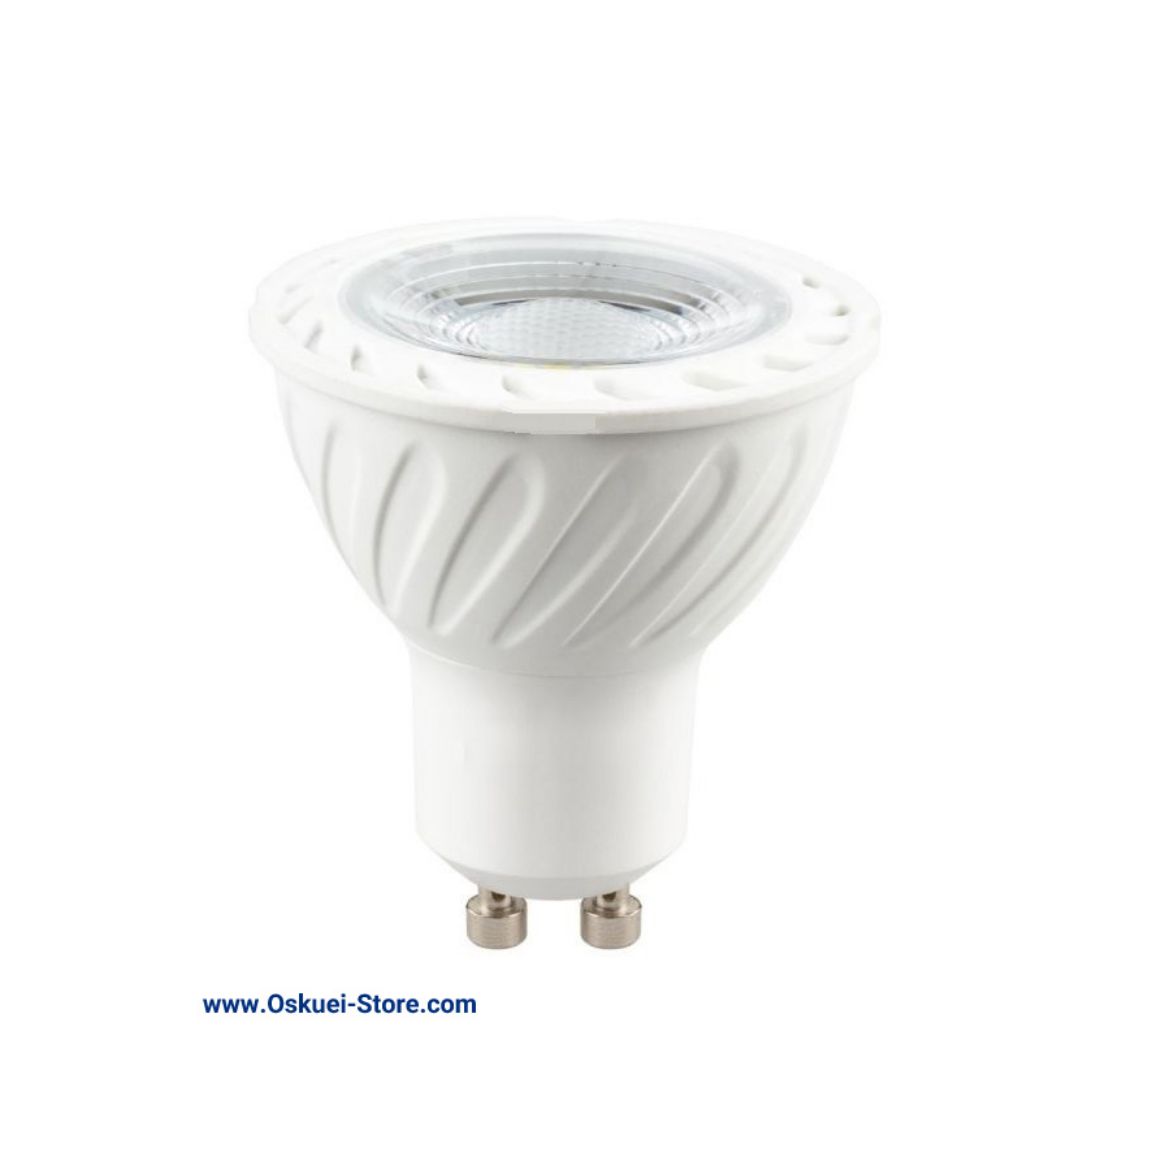 Amada light 6 Watt LED halogen LAMP